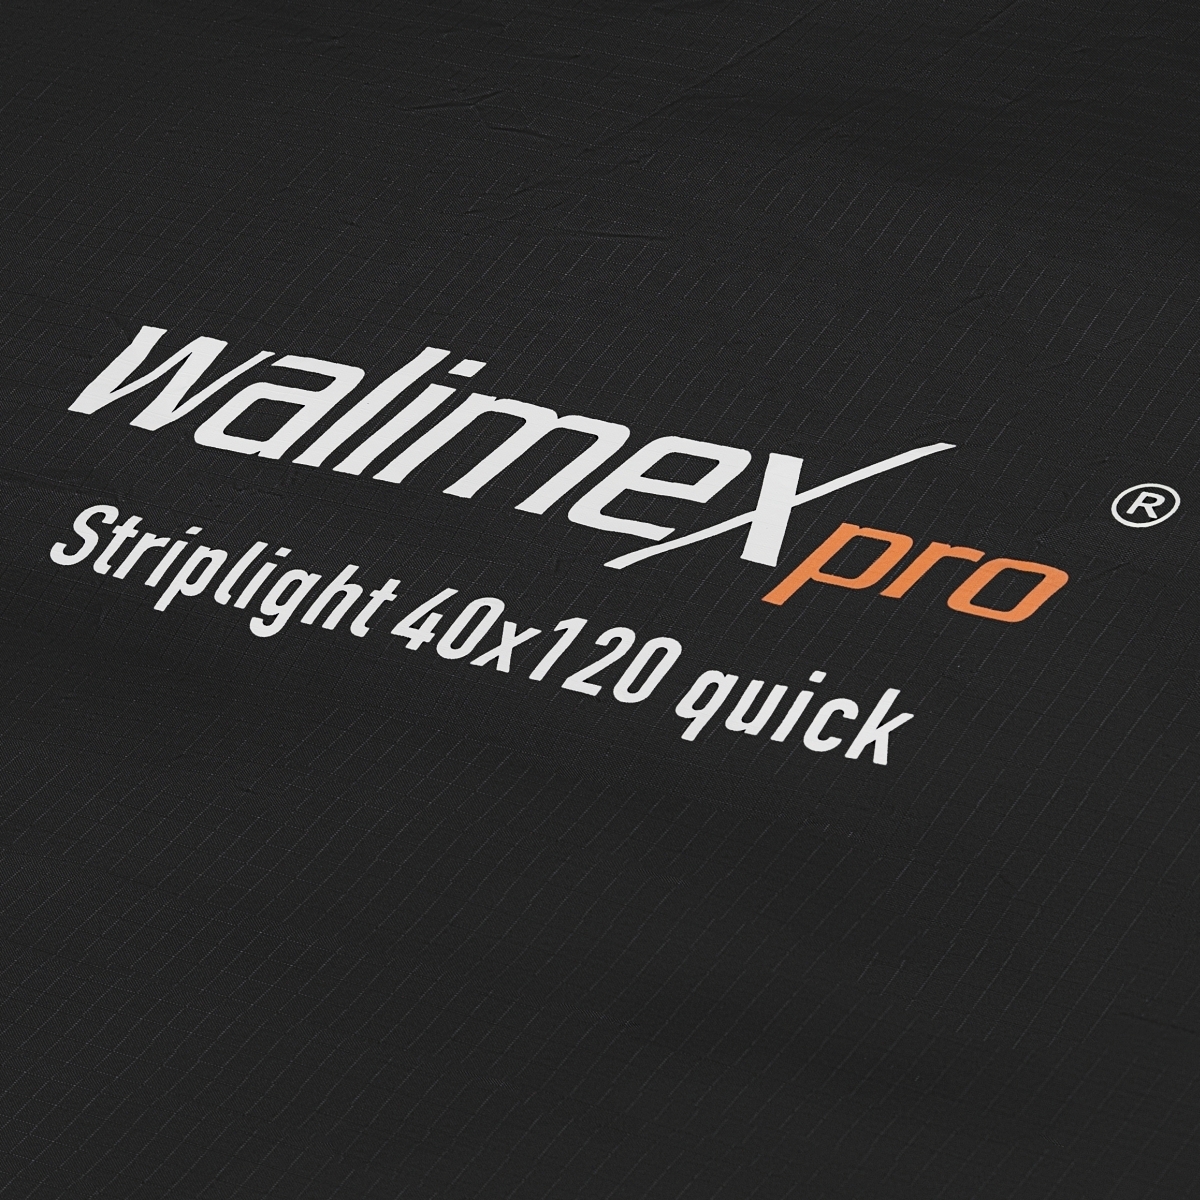 Walimex pro Studio Line Striplight Softbox QA 40x120cm mit Softboxadapter Elinchrom